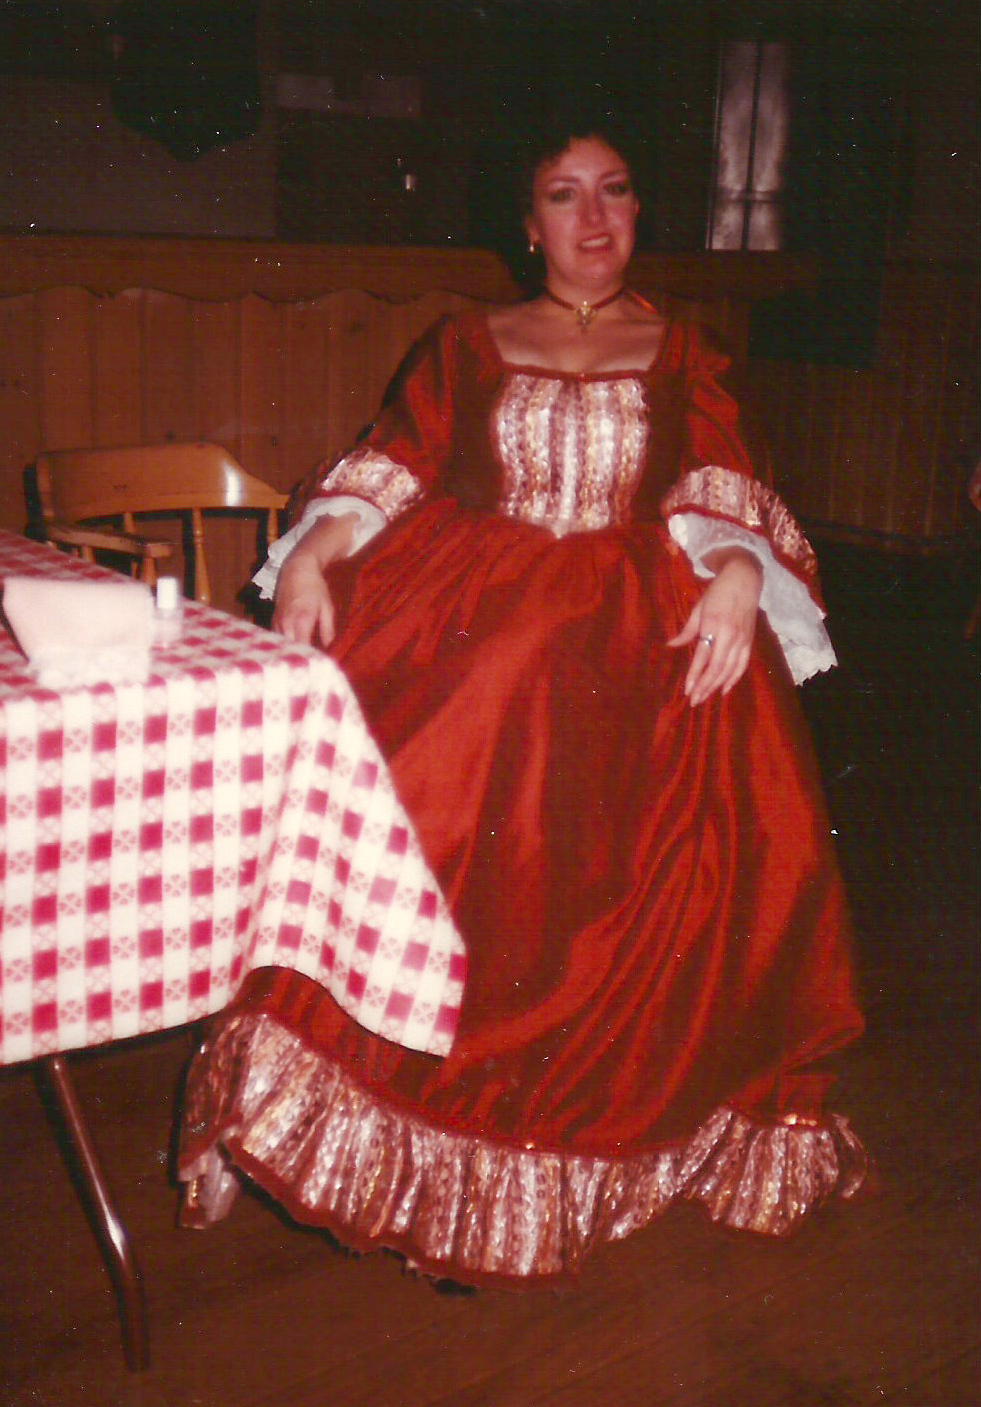 Liederkranz Studio Opera, Der Rosenkavalier, New York City, 1986 – Janice as Annina